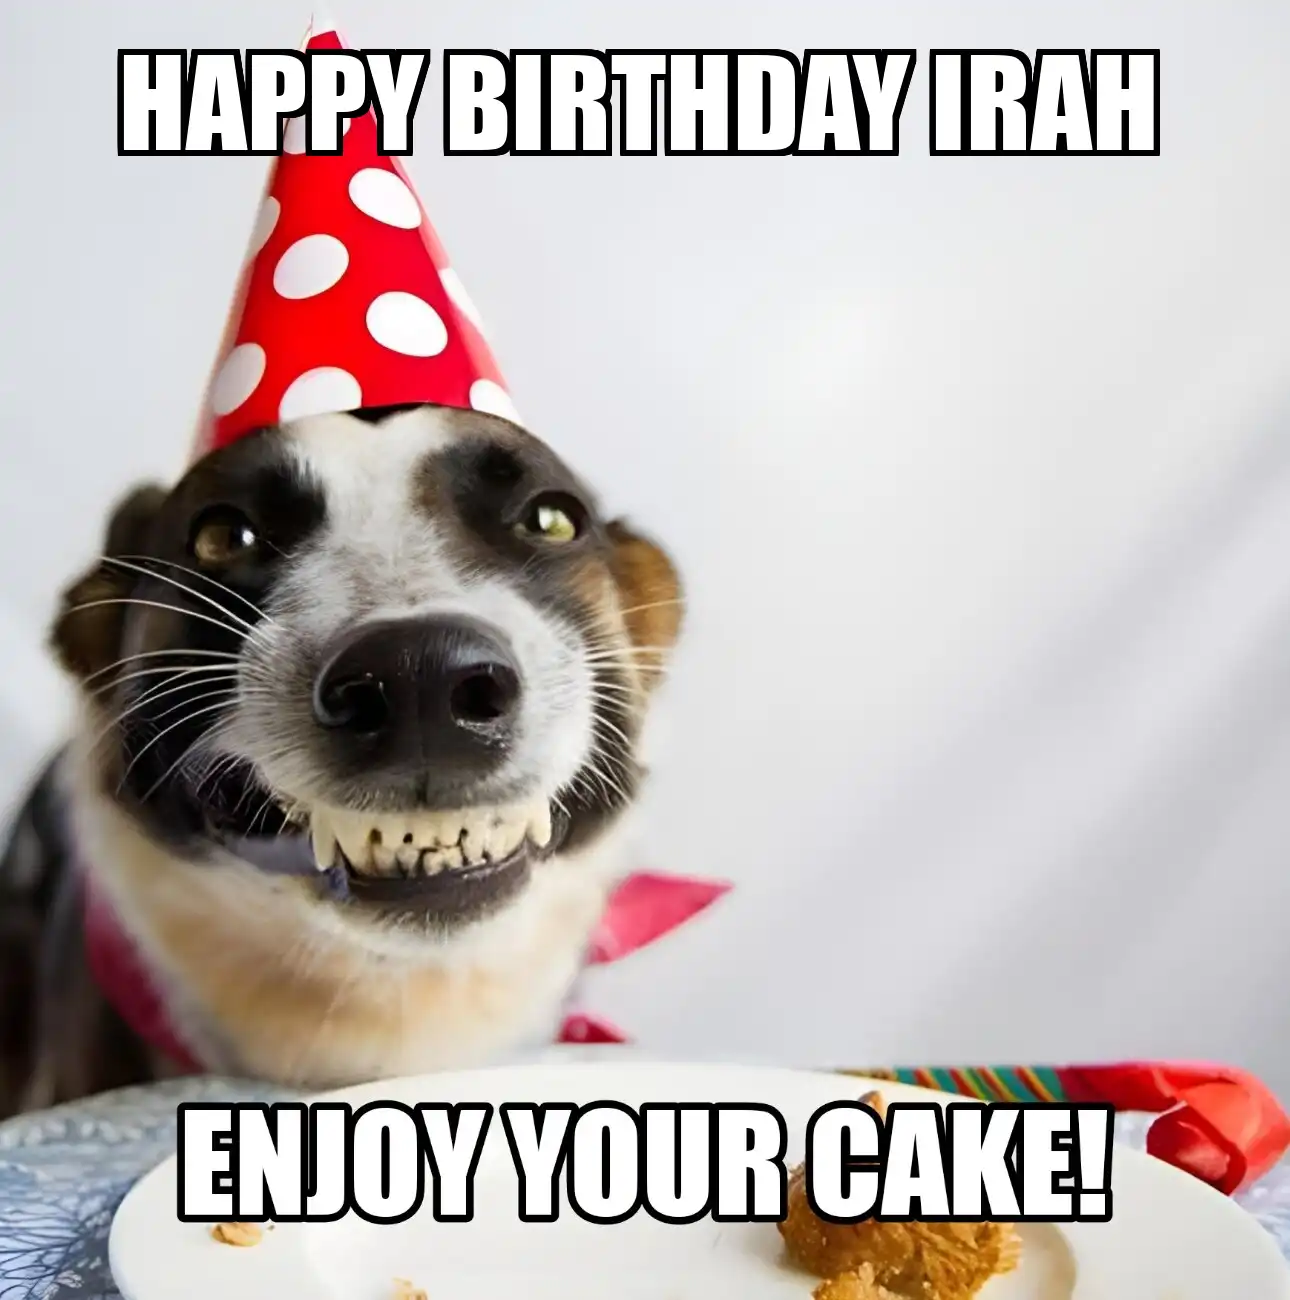 Happy Birthday Irah Enjoy Your Cake Dog Meme